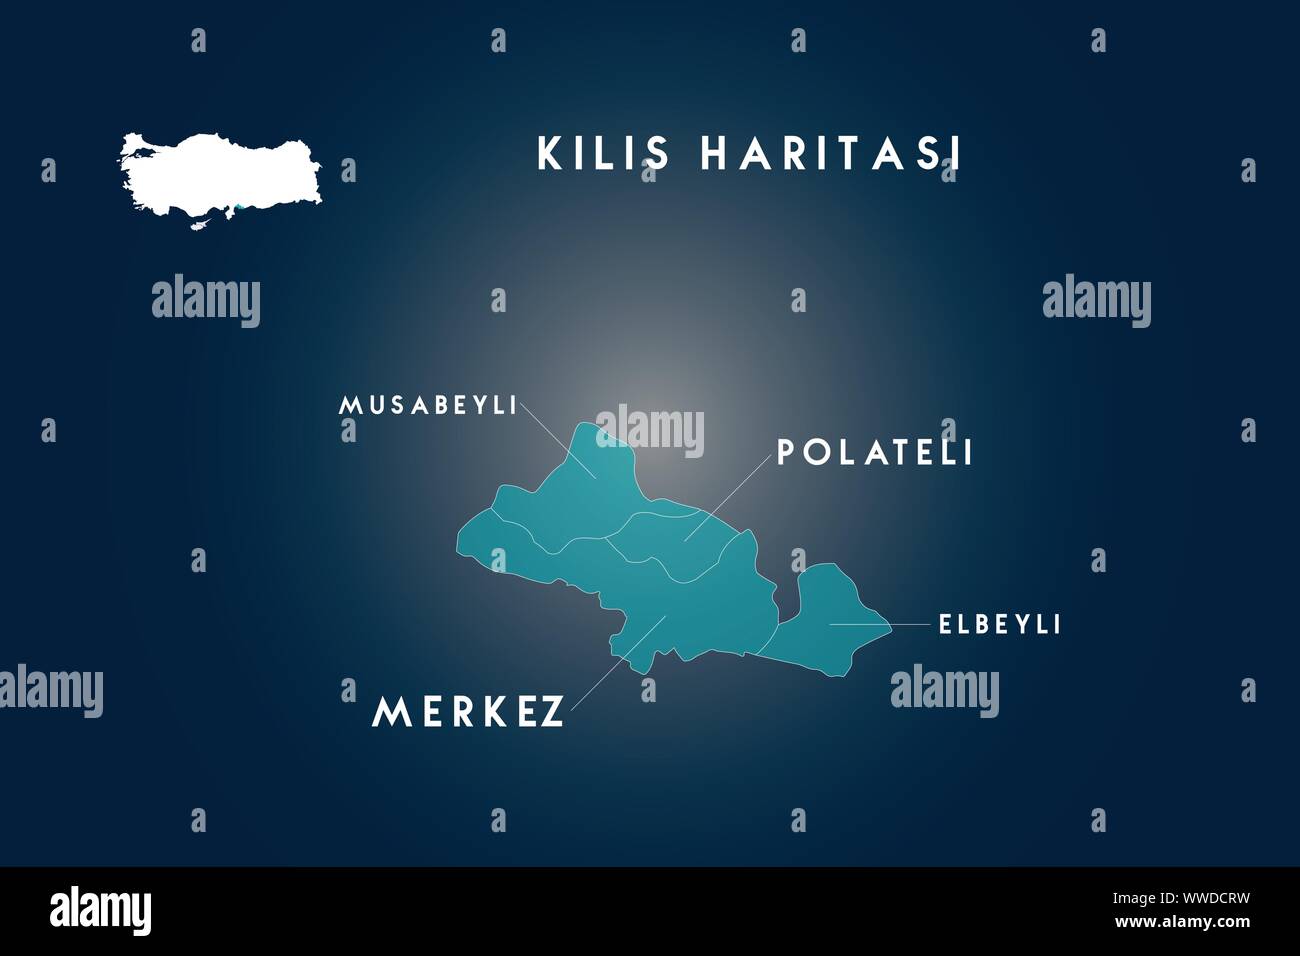 Kilis districts musabeyli, polateli, elbeyli map, Turkey Stock Vector